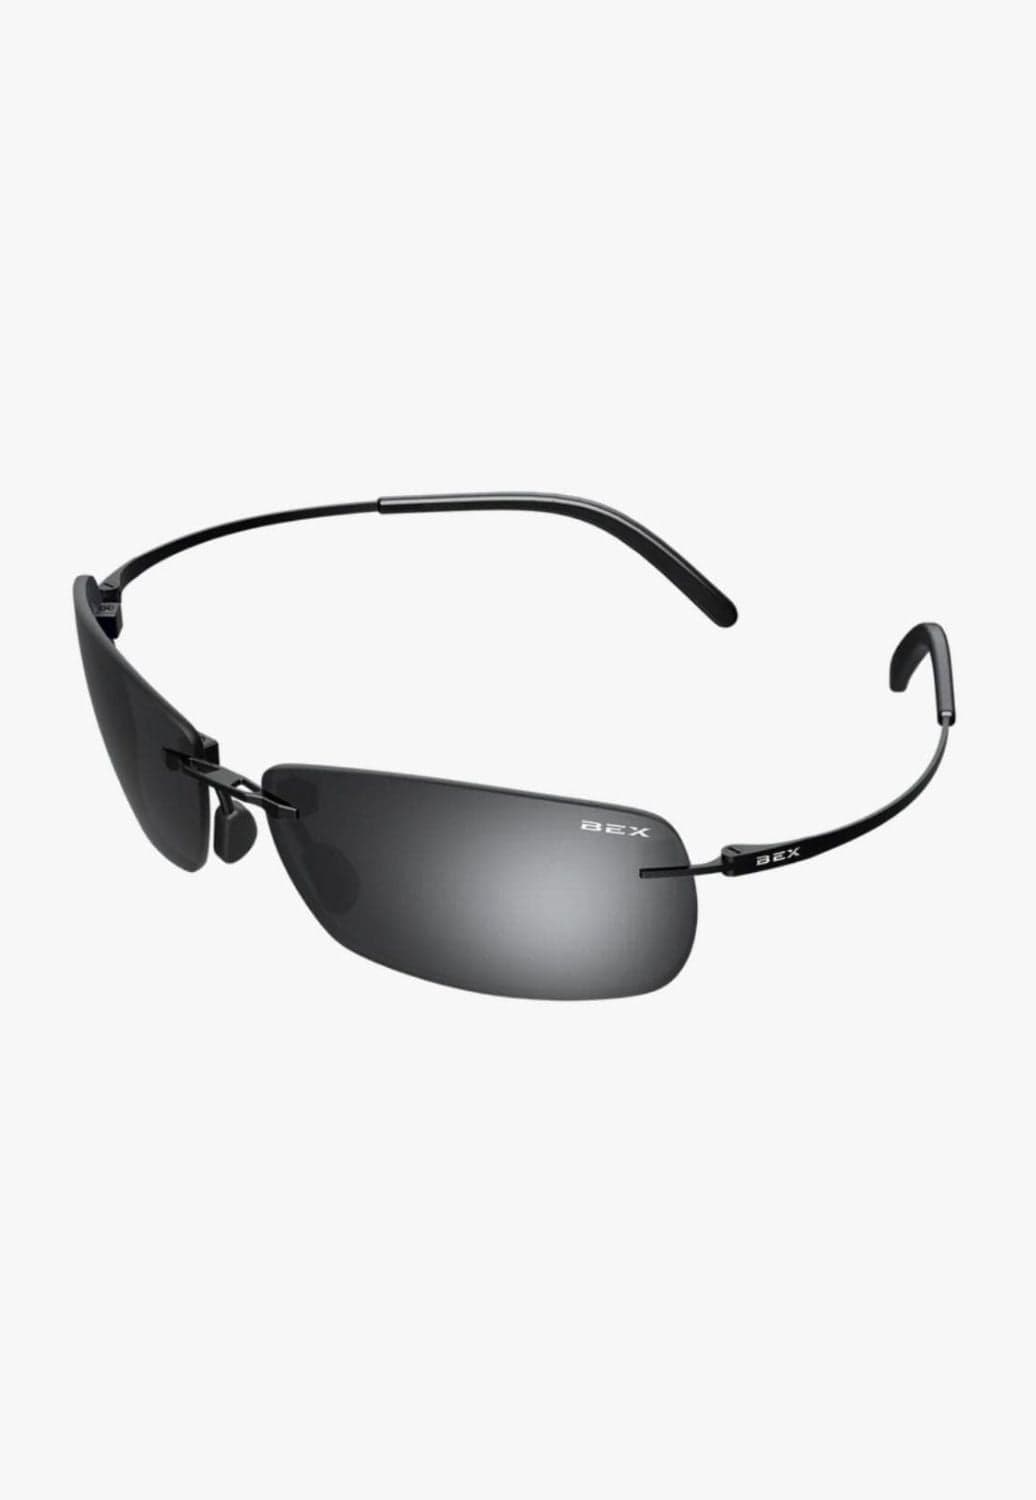 BEX ACCESSORIES-Sunglasses Black/Grey BEX Fynnland X Sunglasses